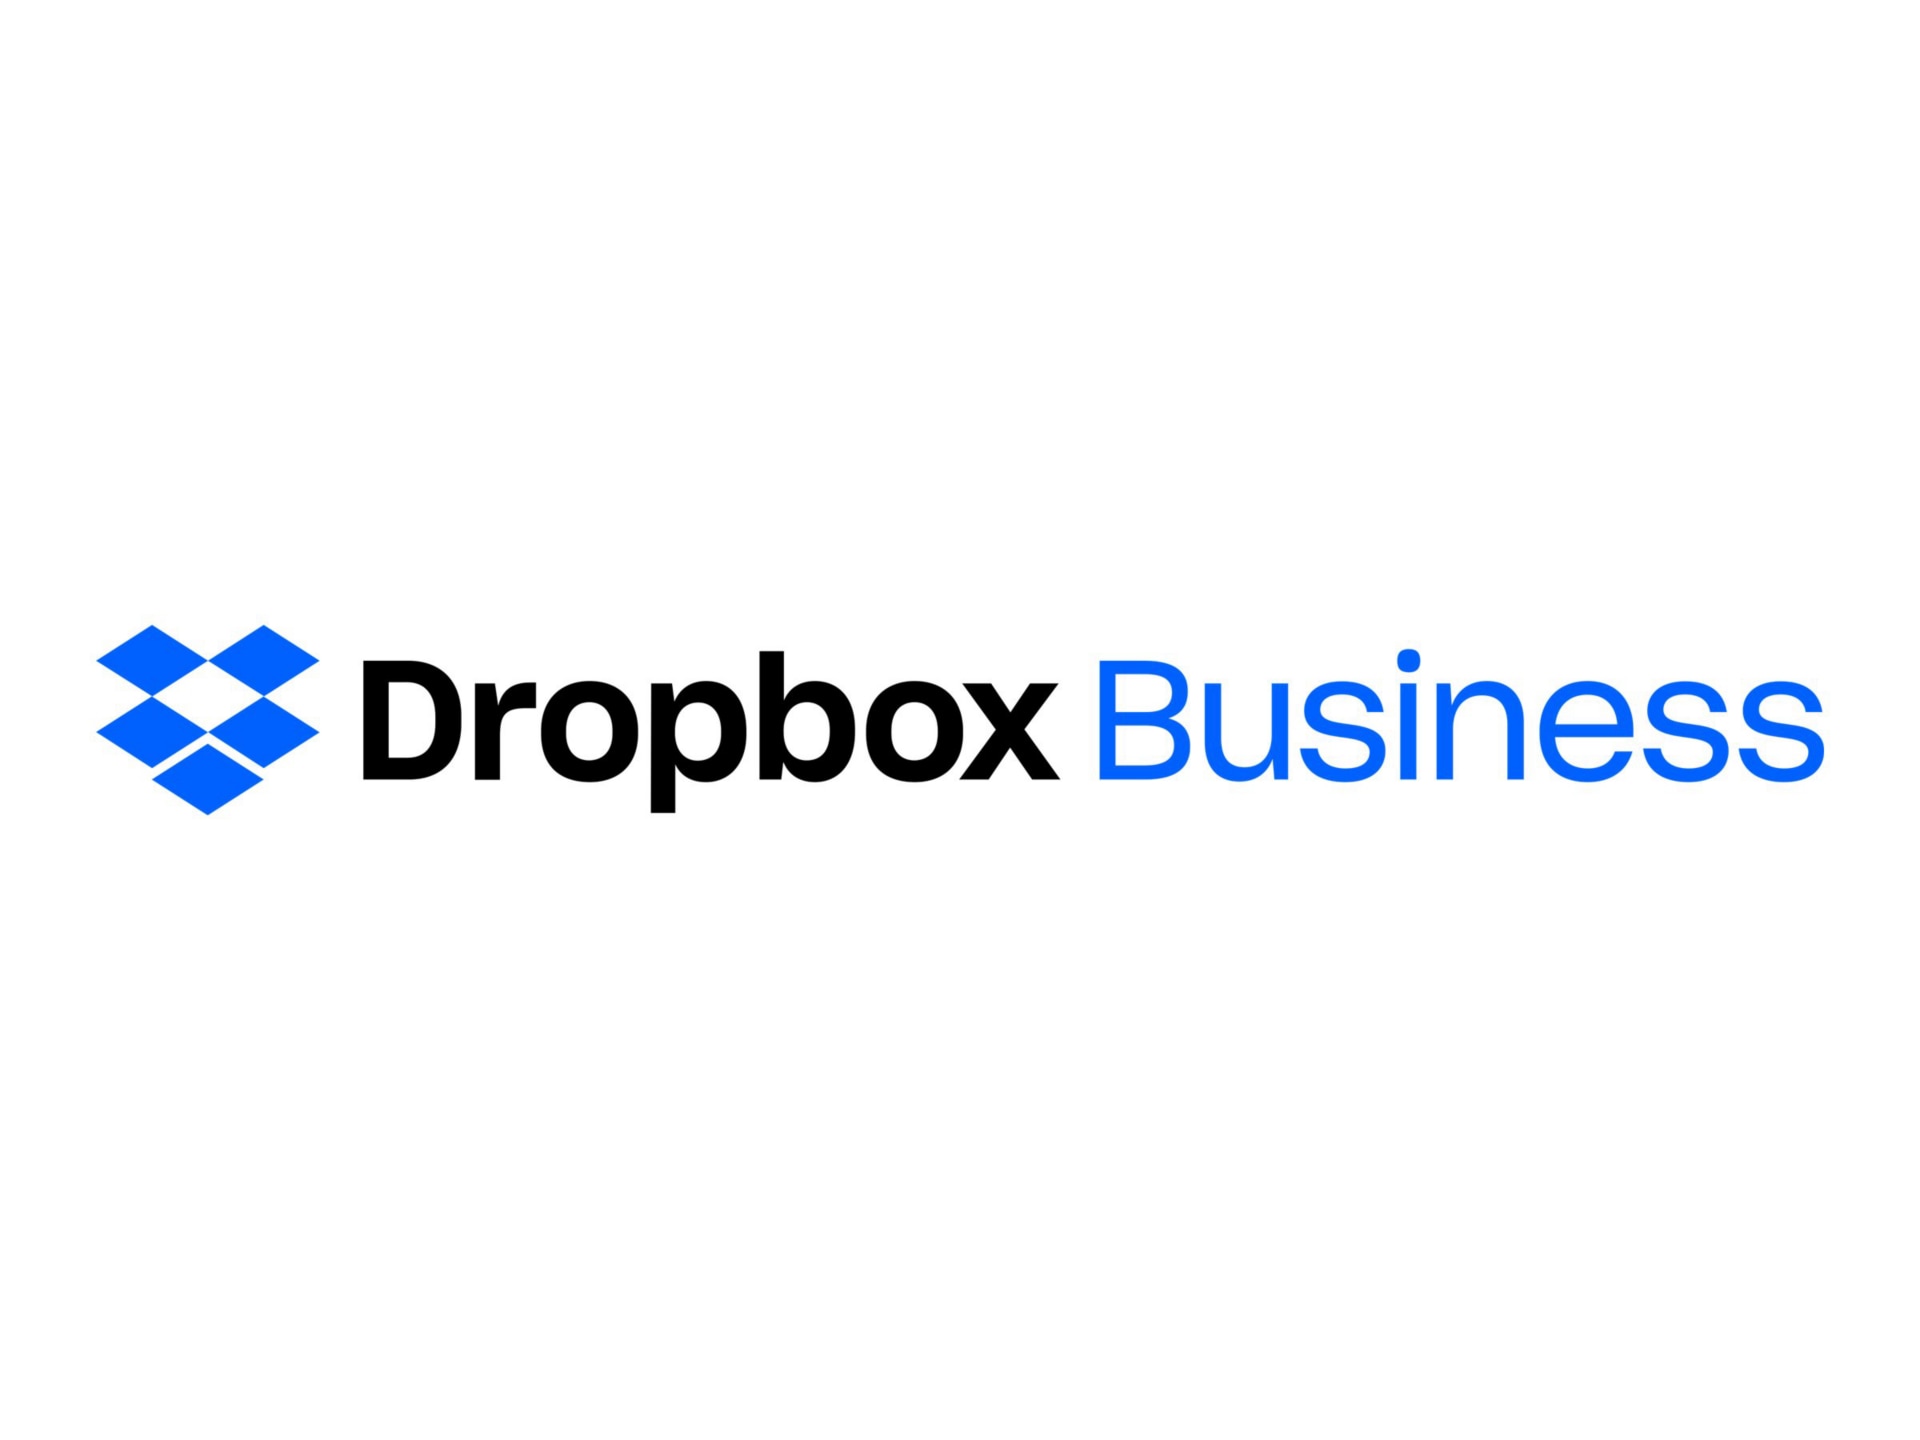 Dropbox Business Enterprise - subscription upgrade license (9 months) - 1 u